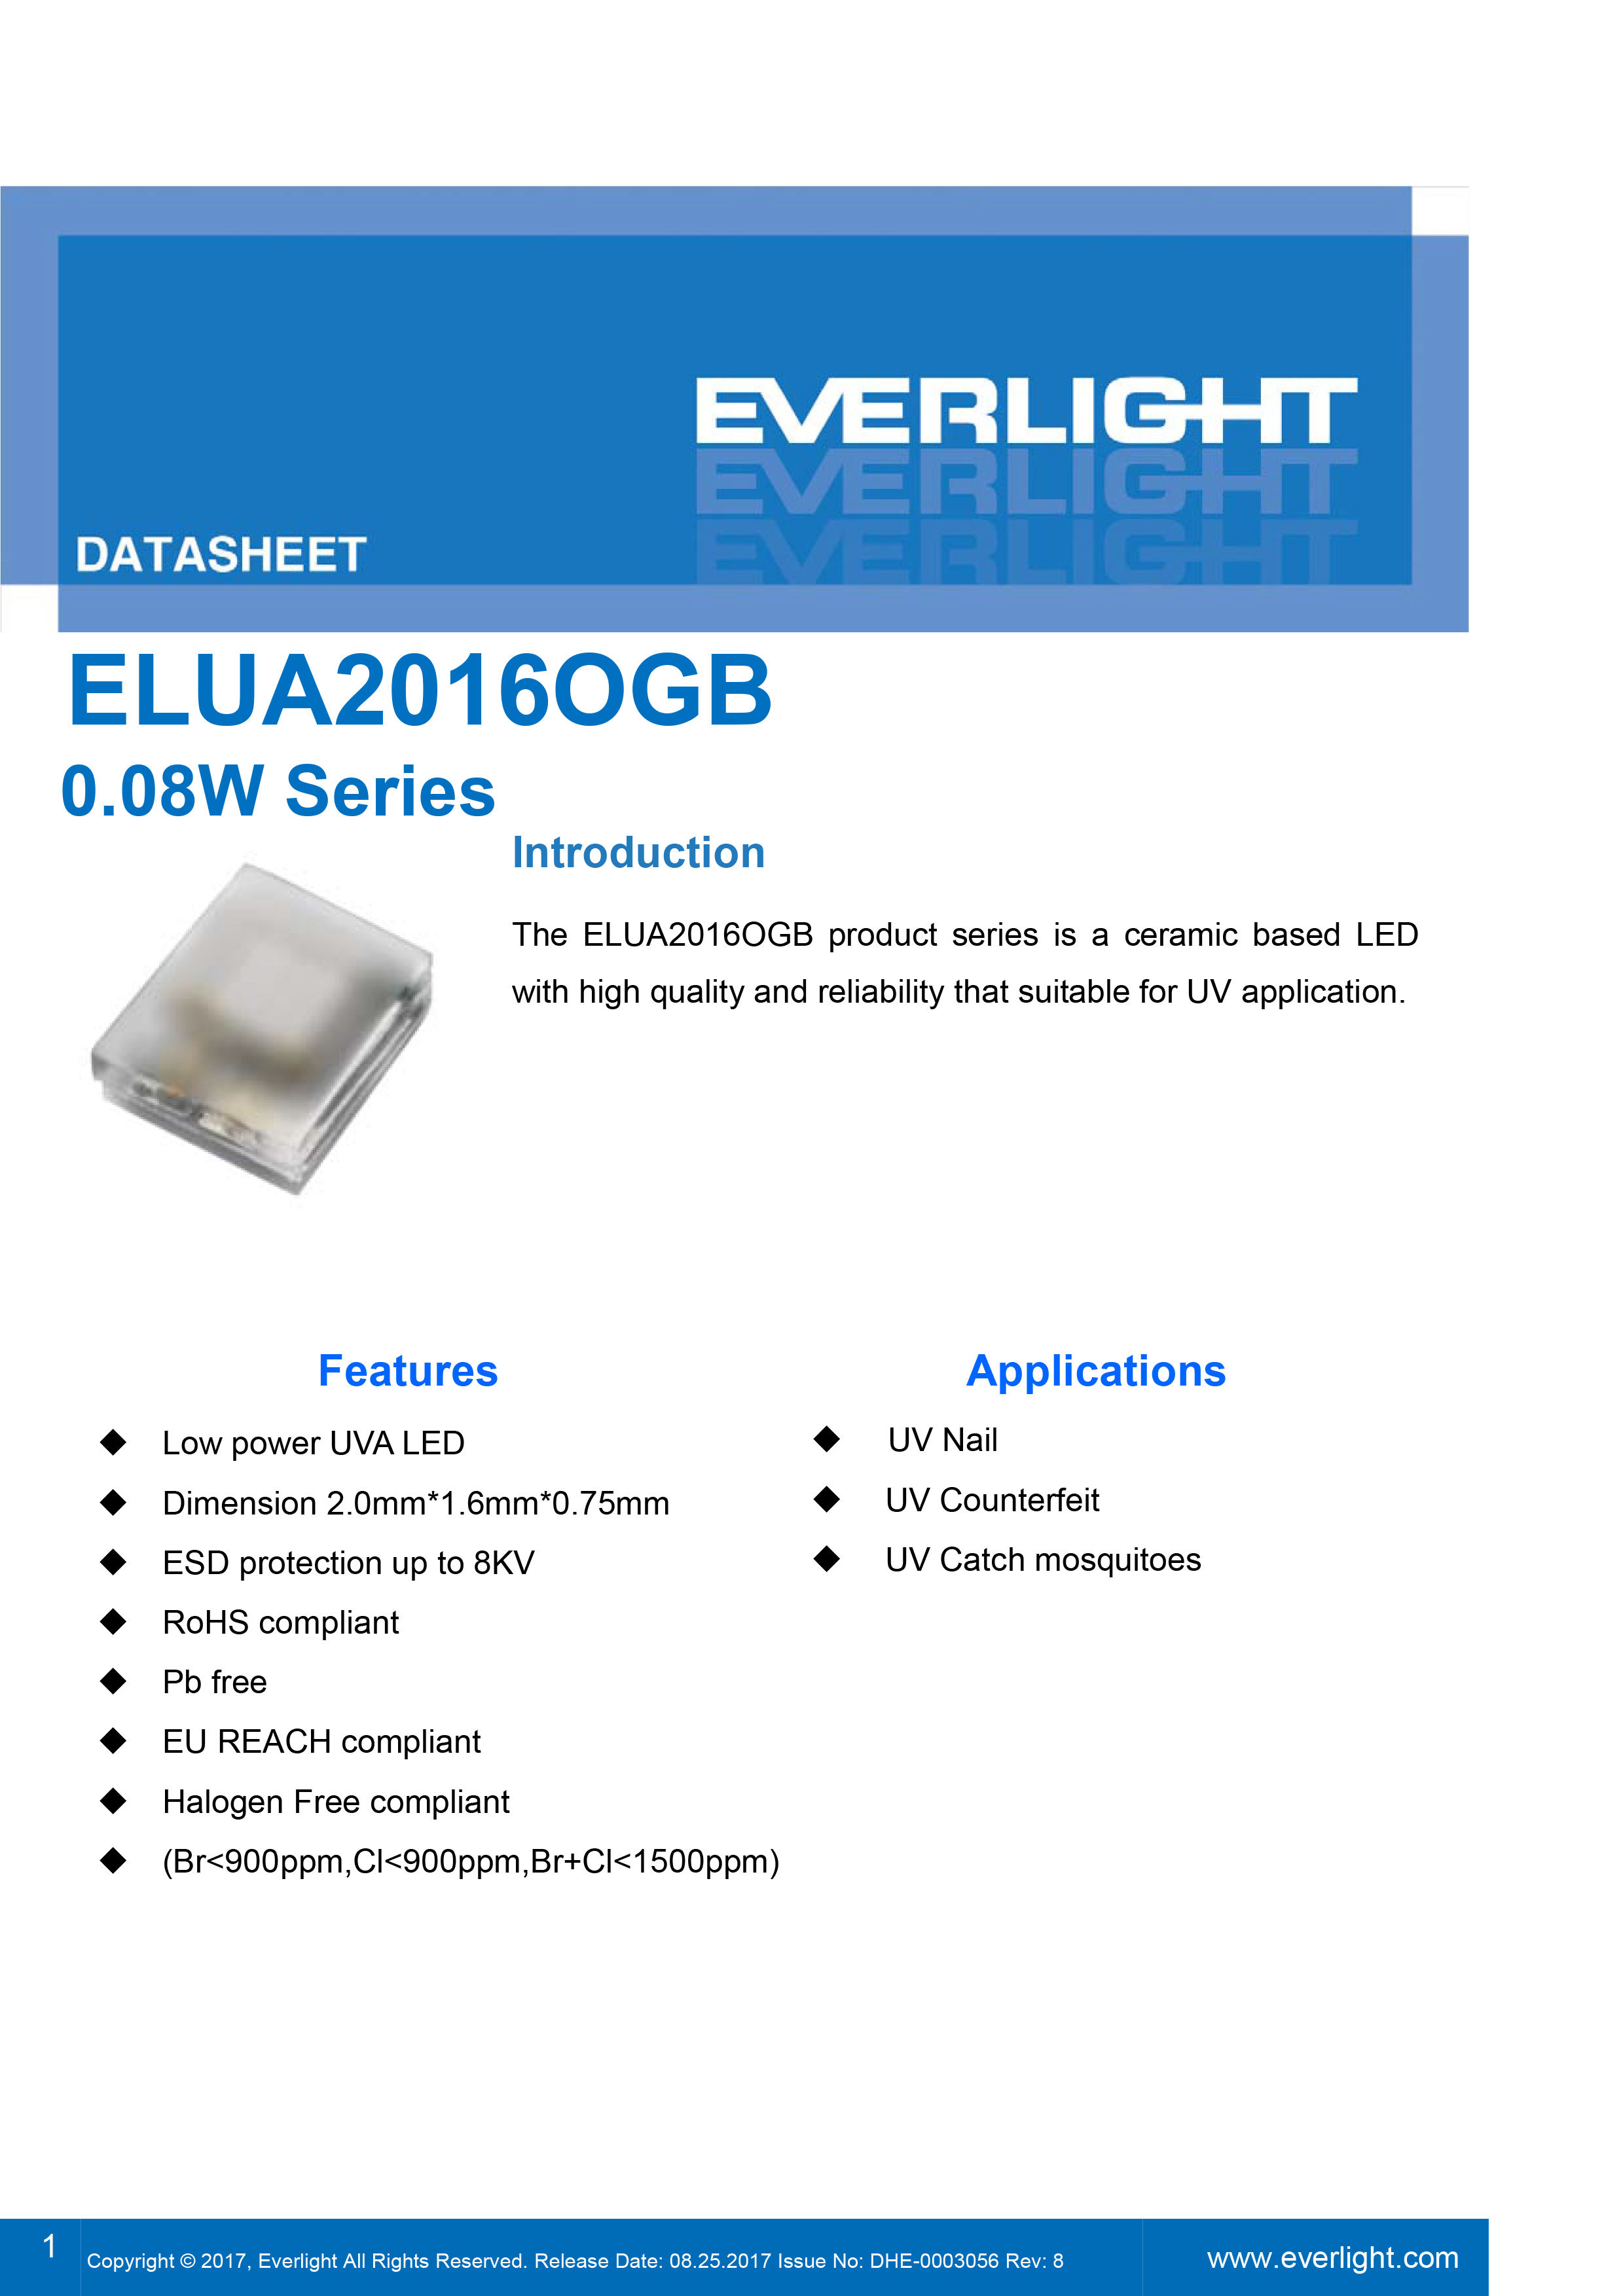 EVERLIGHT SMD 0.08W UV LED ELUA2016OGB-P6070Q43040020-VA1M Datasheet